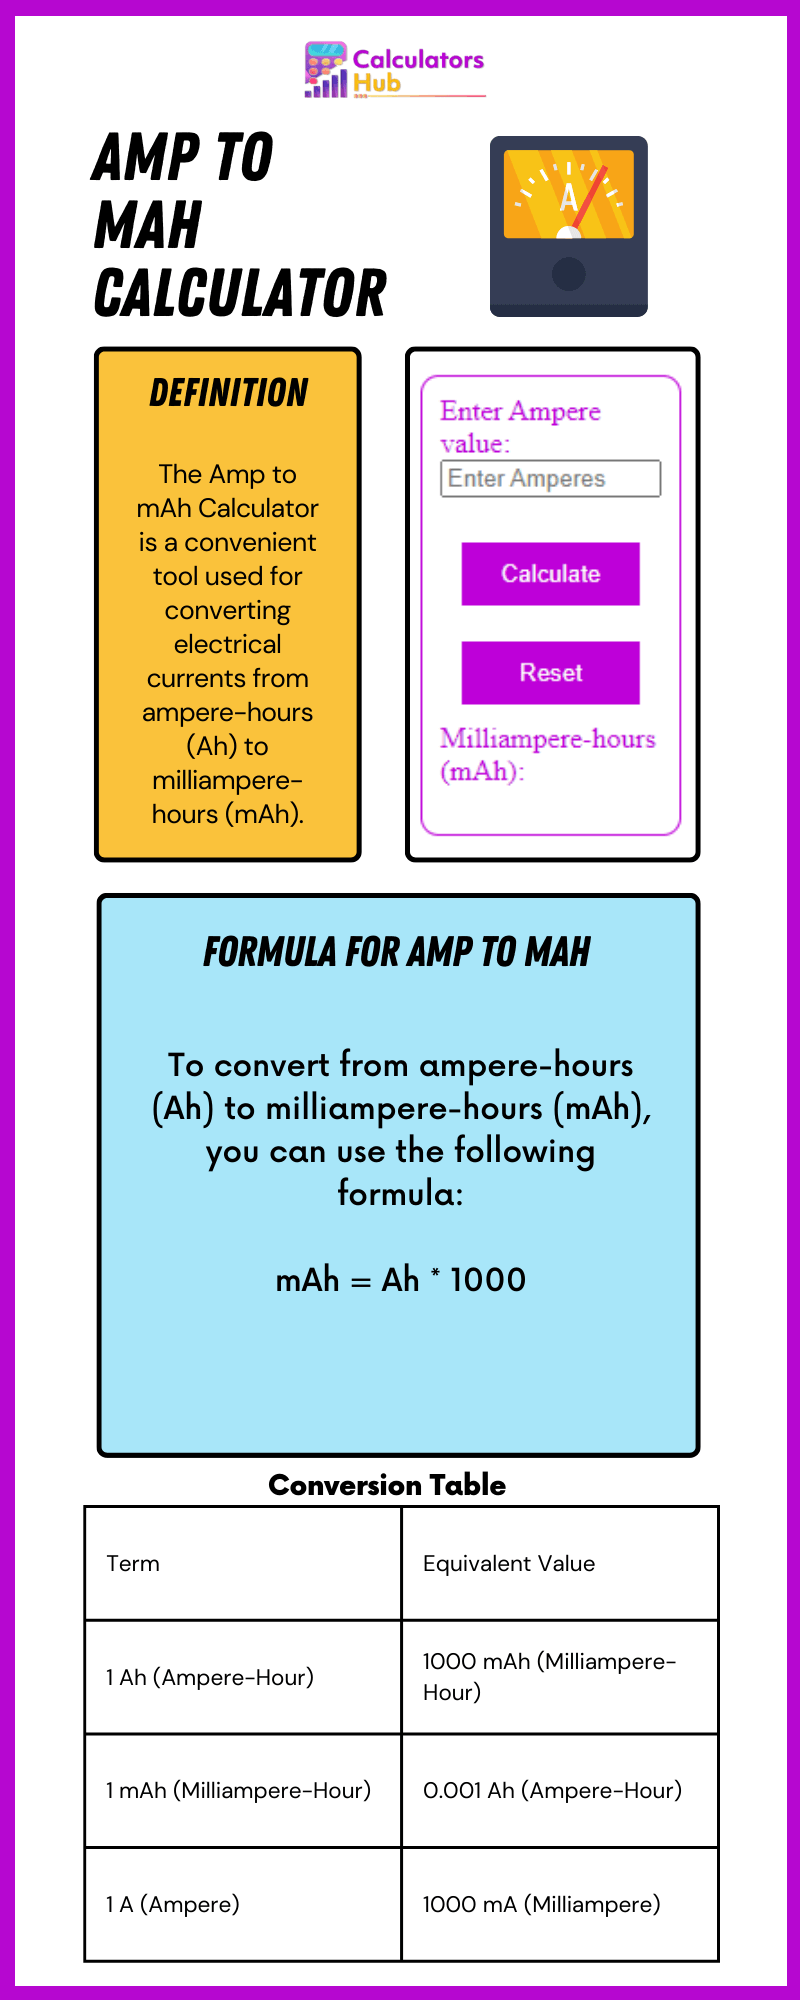 Amp to mAh Calculator